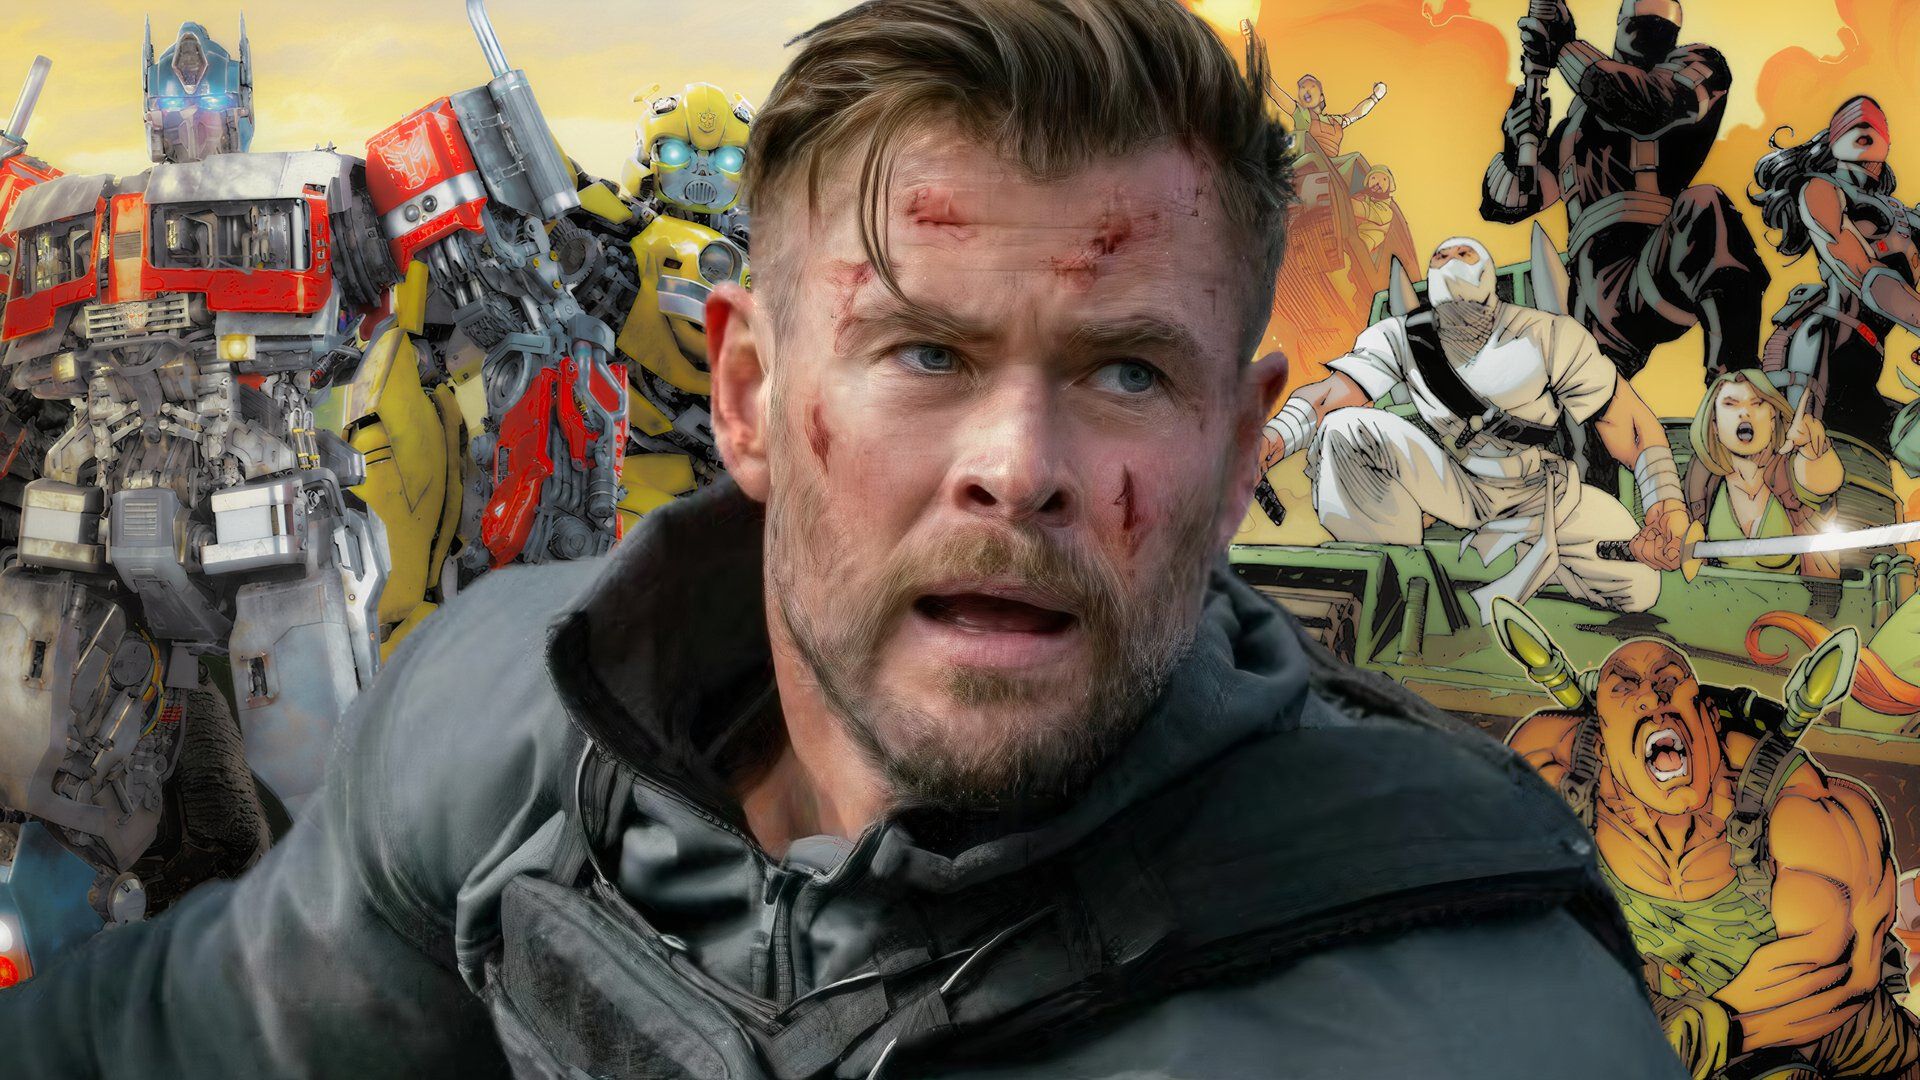 Chris Hemsworth alongside the Transformers and G.I. Joe